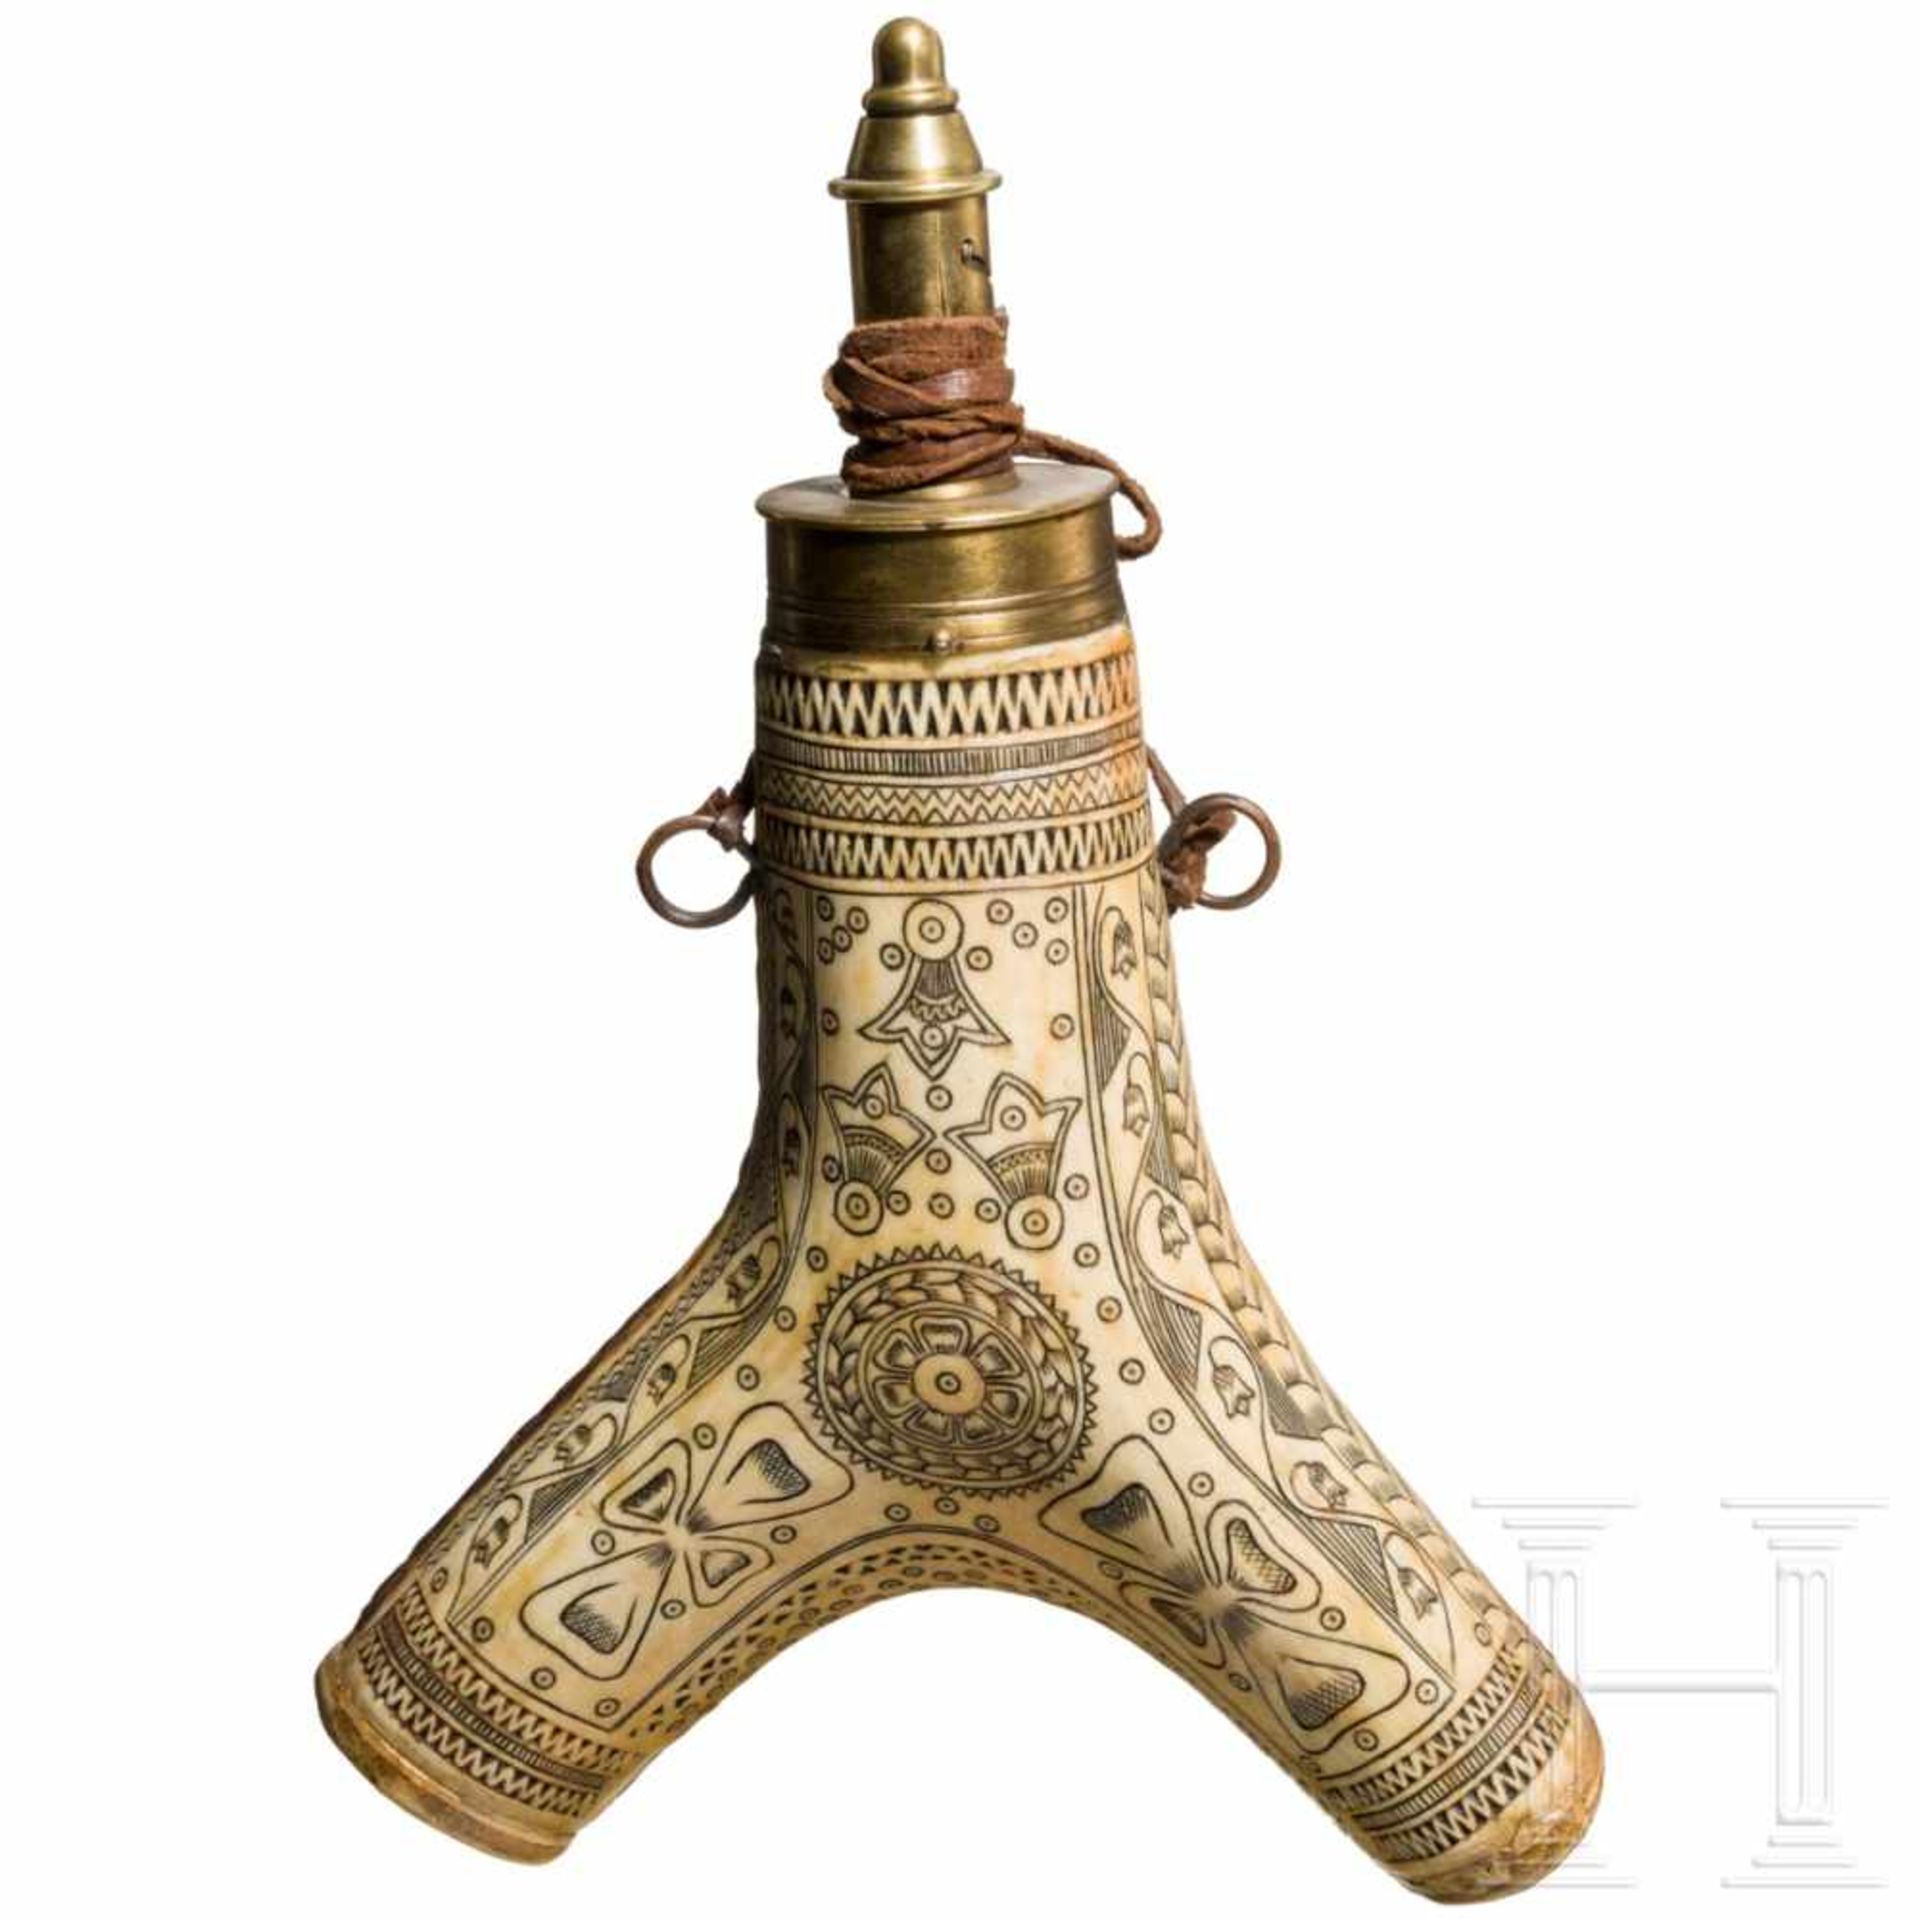 A carved Transylvanian powder flask, 18th/19th centuryFork-shaped powder flask made of deer